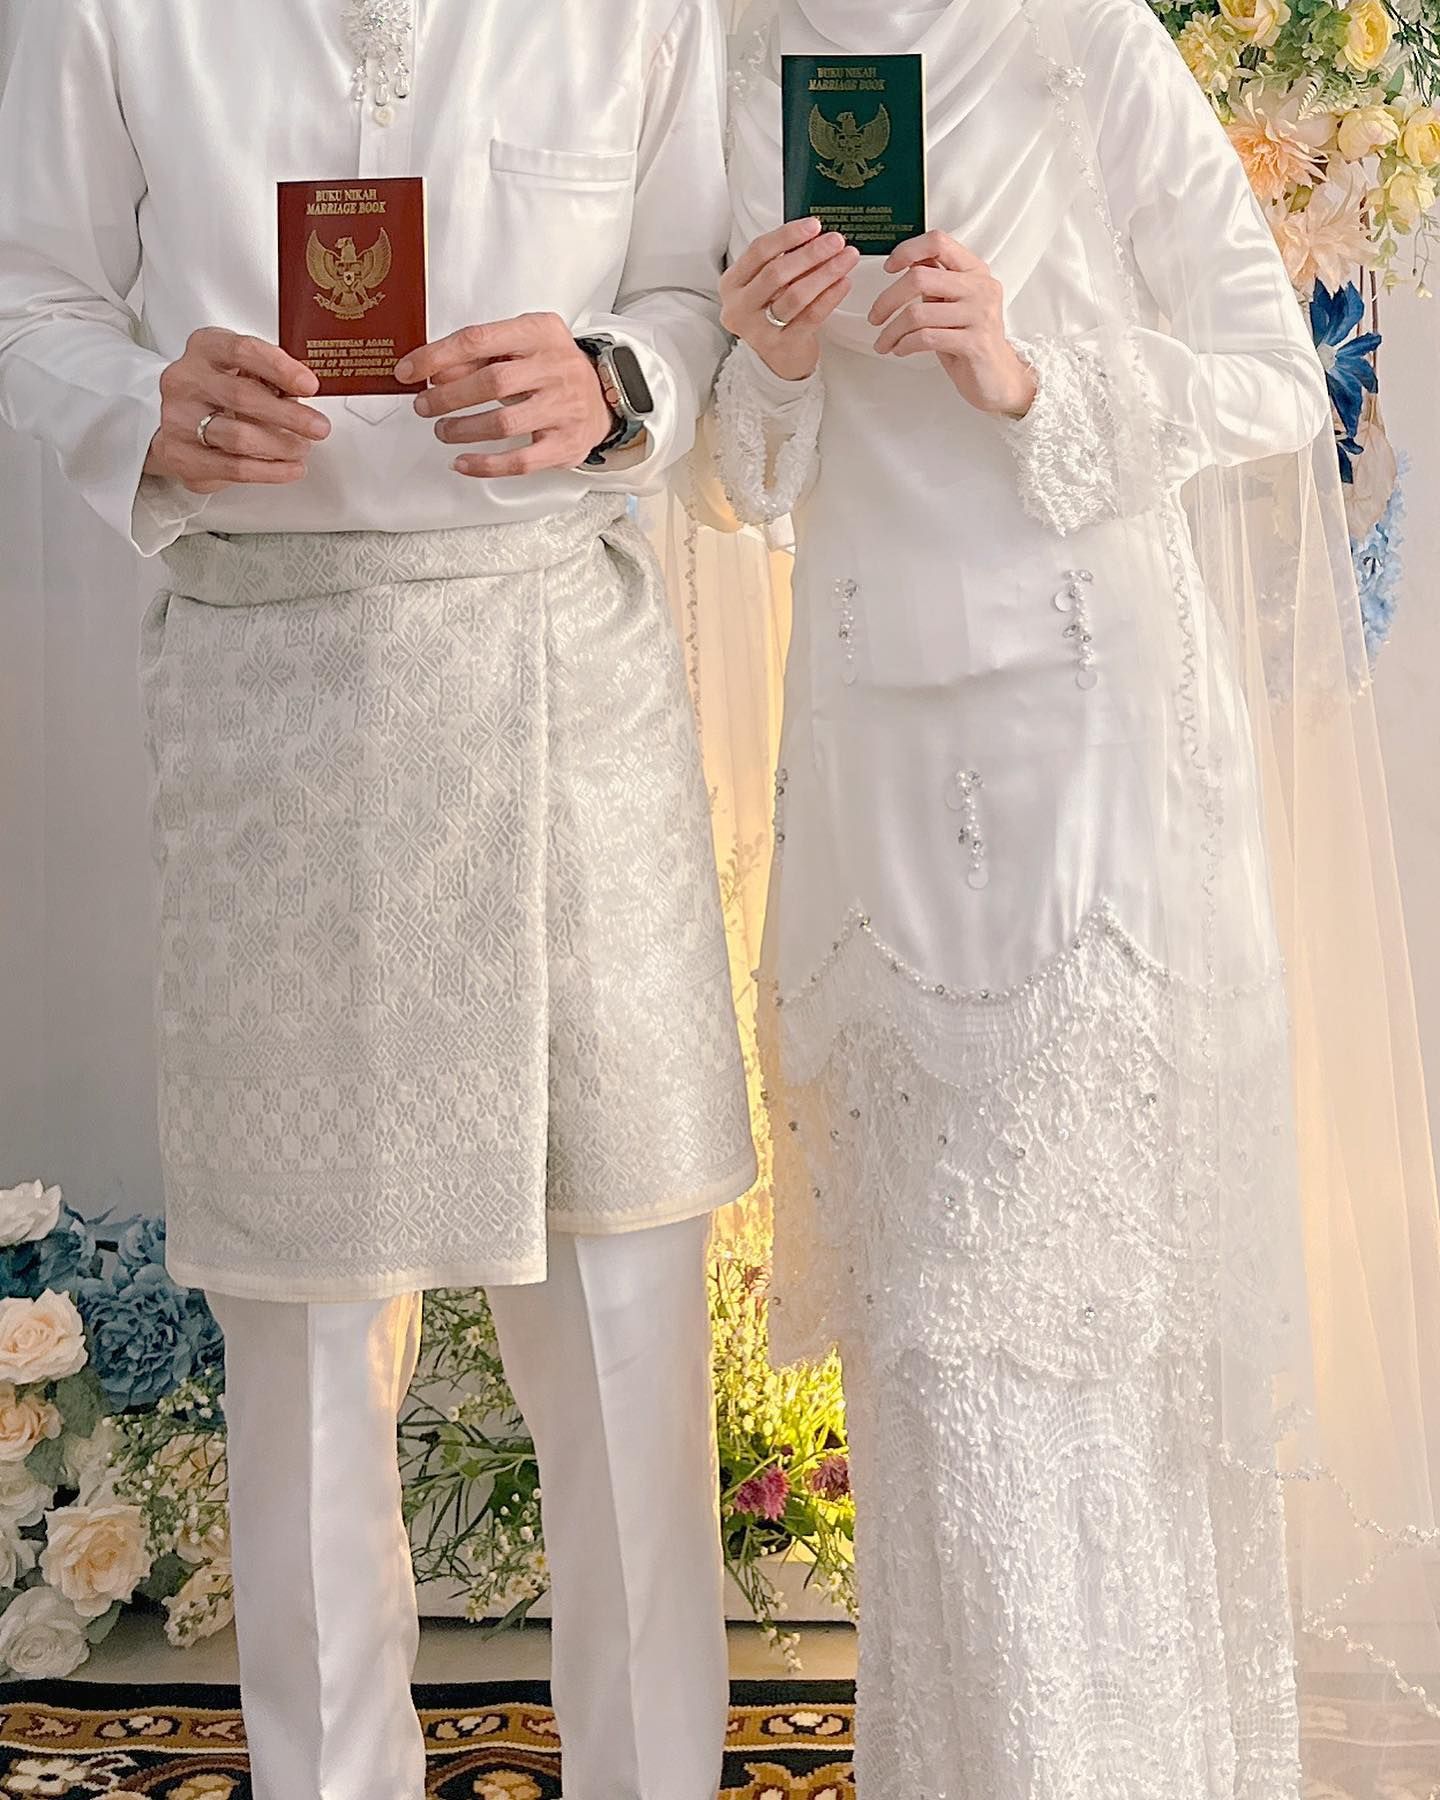 Larissa Chou's elegant style at her wedding ceremony/ Photo: Instagram/larissachou